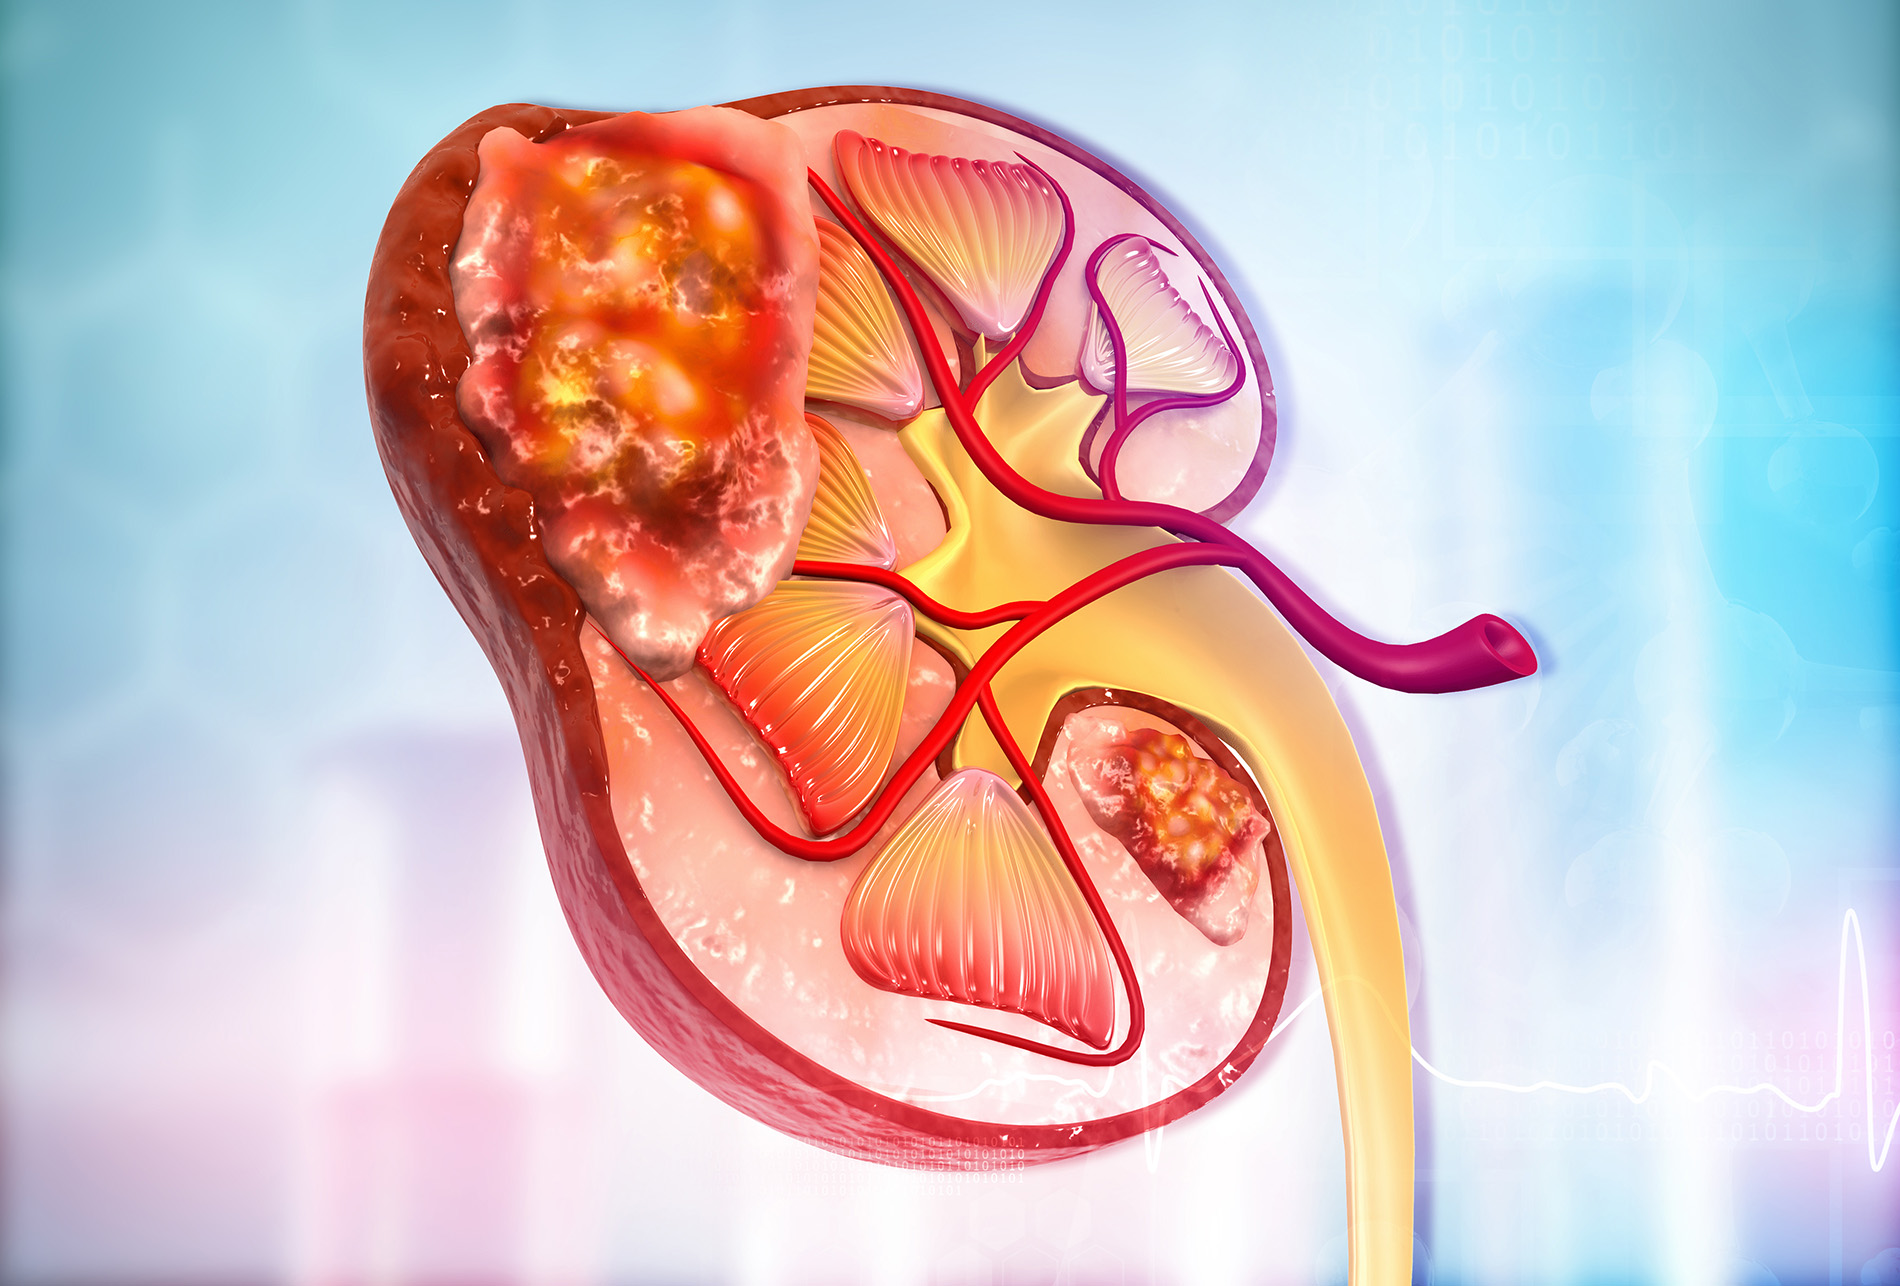 Anatomical illustration of kidneys